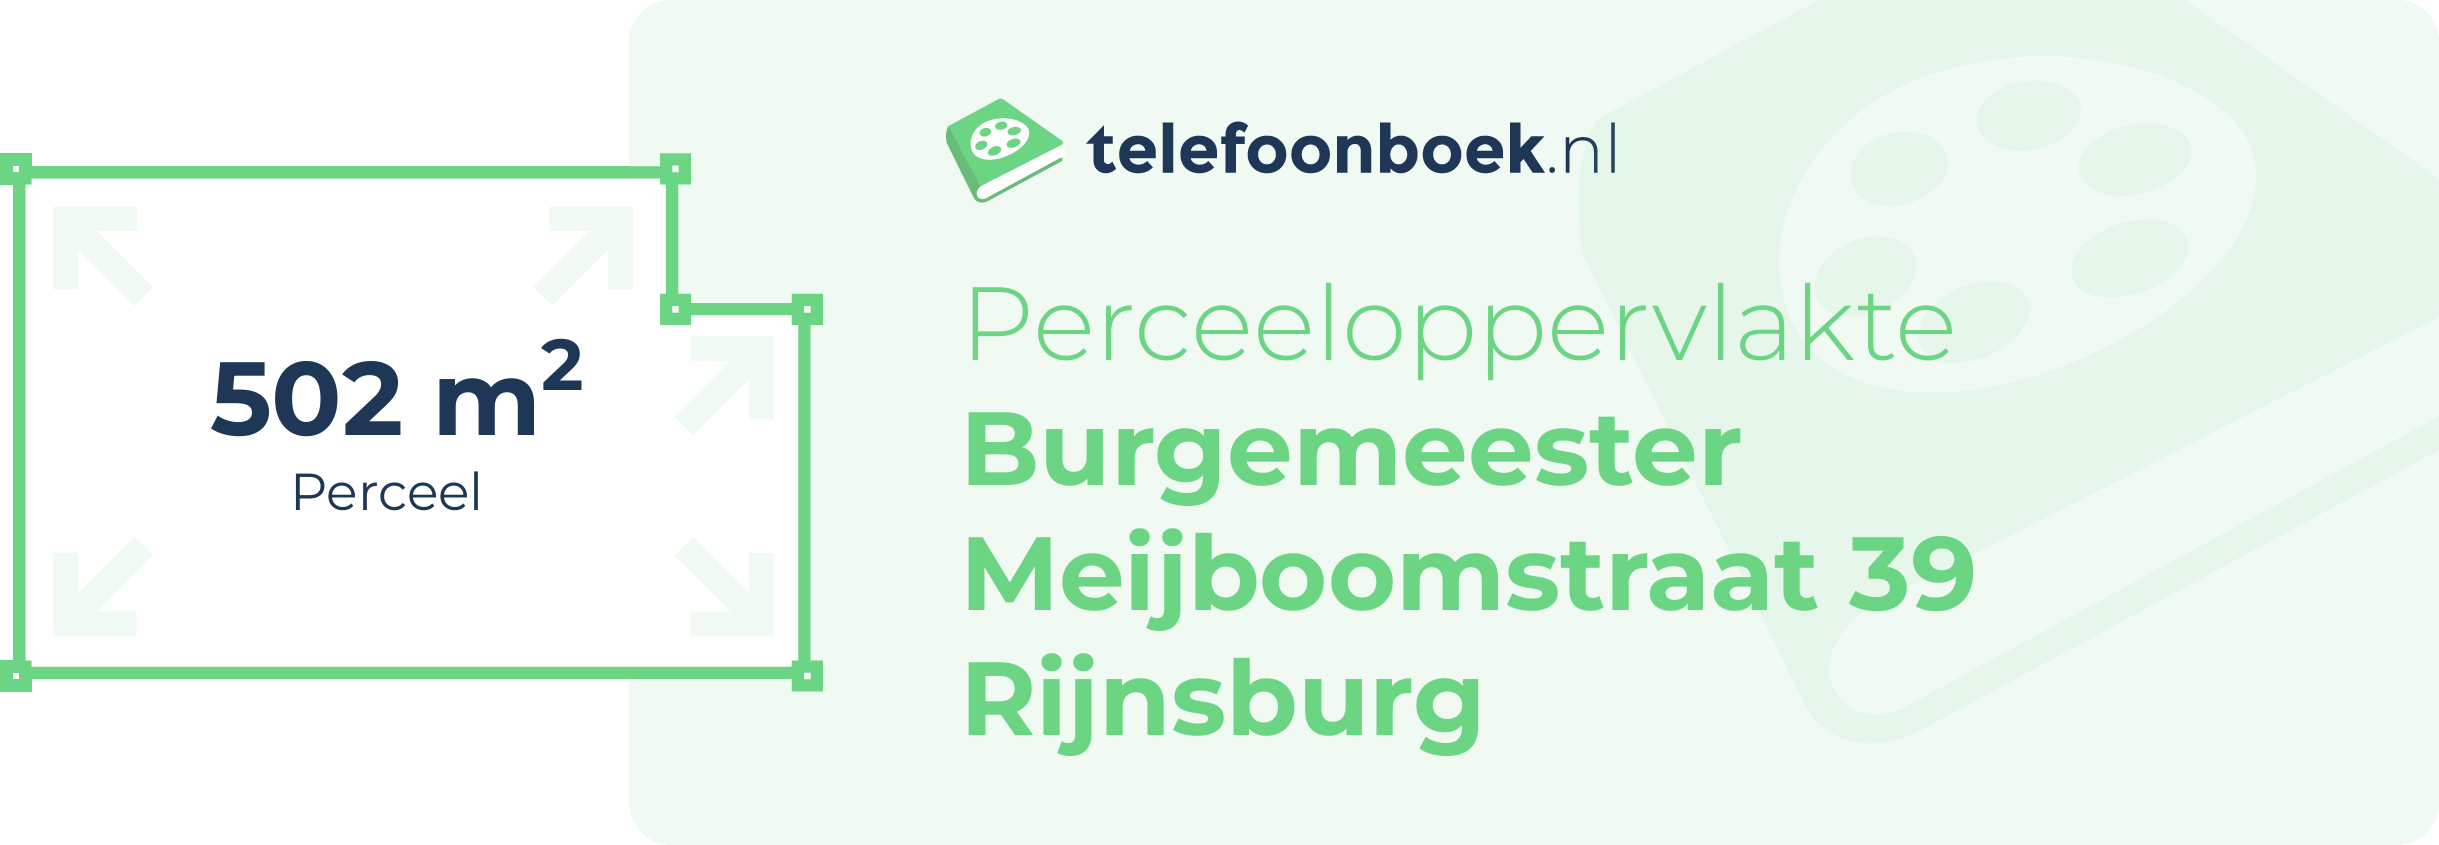 Perceeloppervlakte Burgemeester Meijboomstraat 39 Rijnsburg